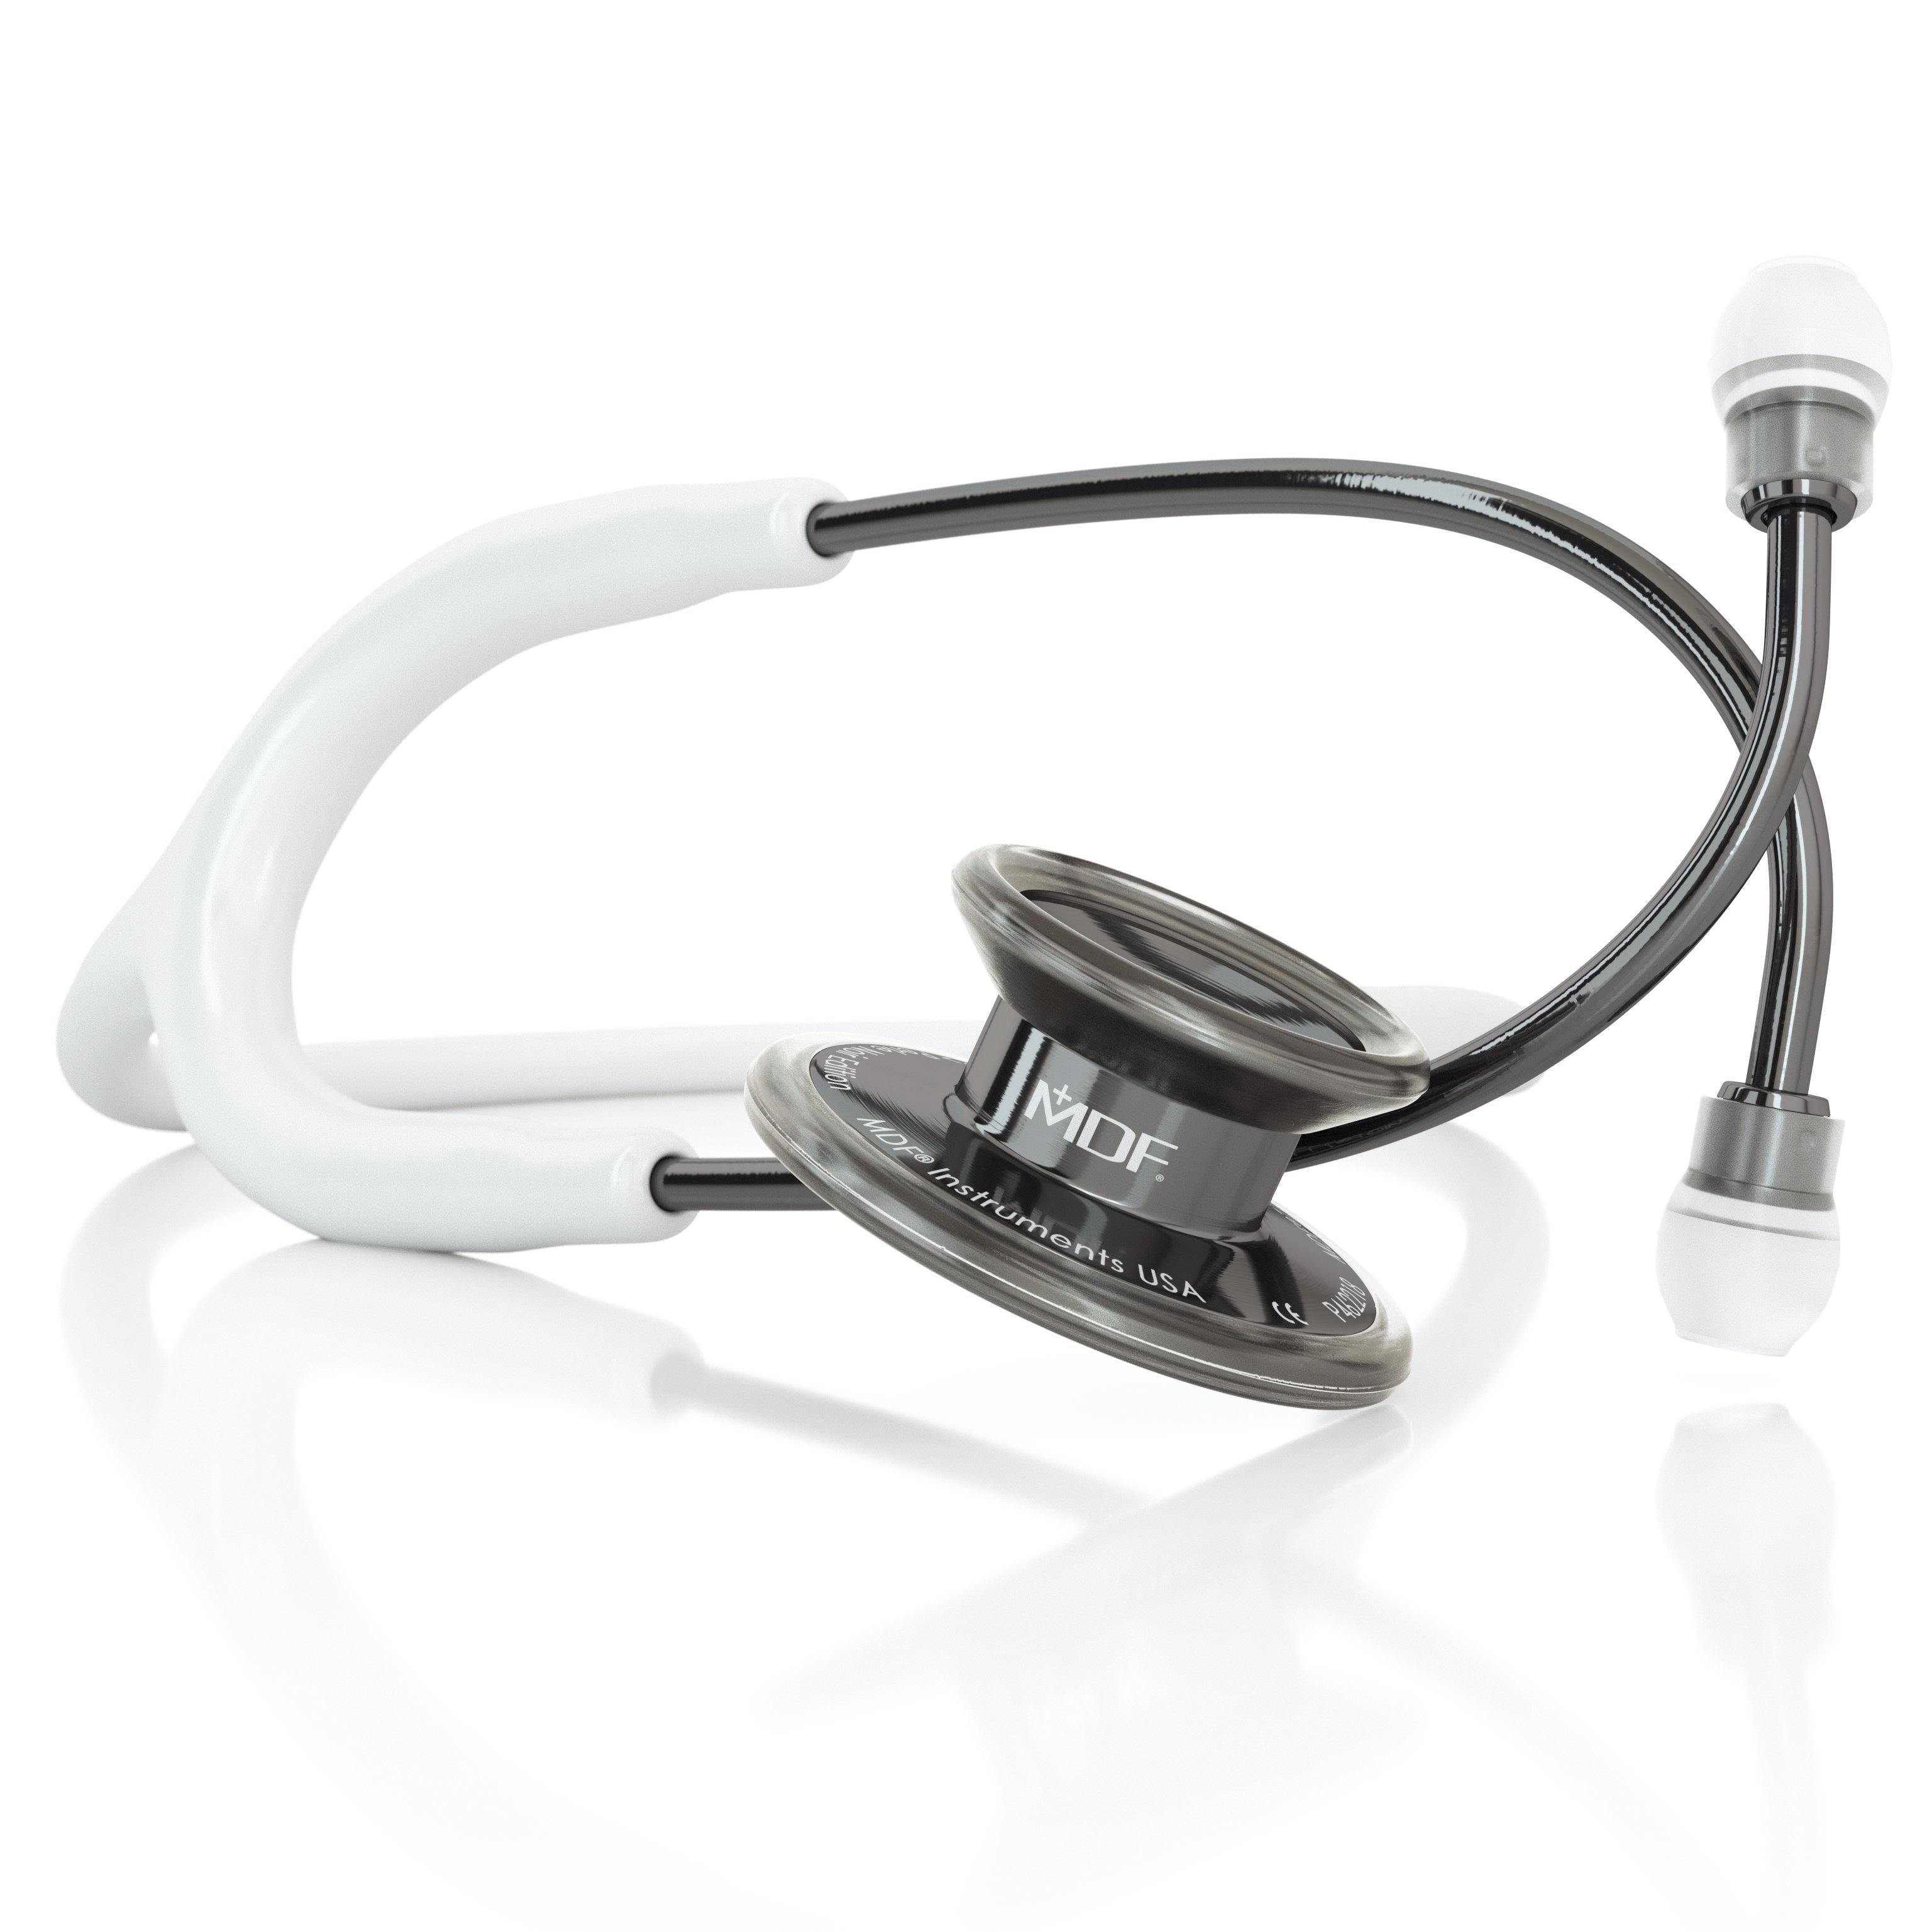 MD One® Adult Stethoscope - White/Perla Noire